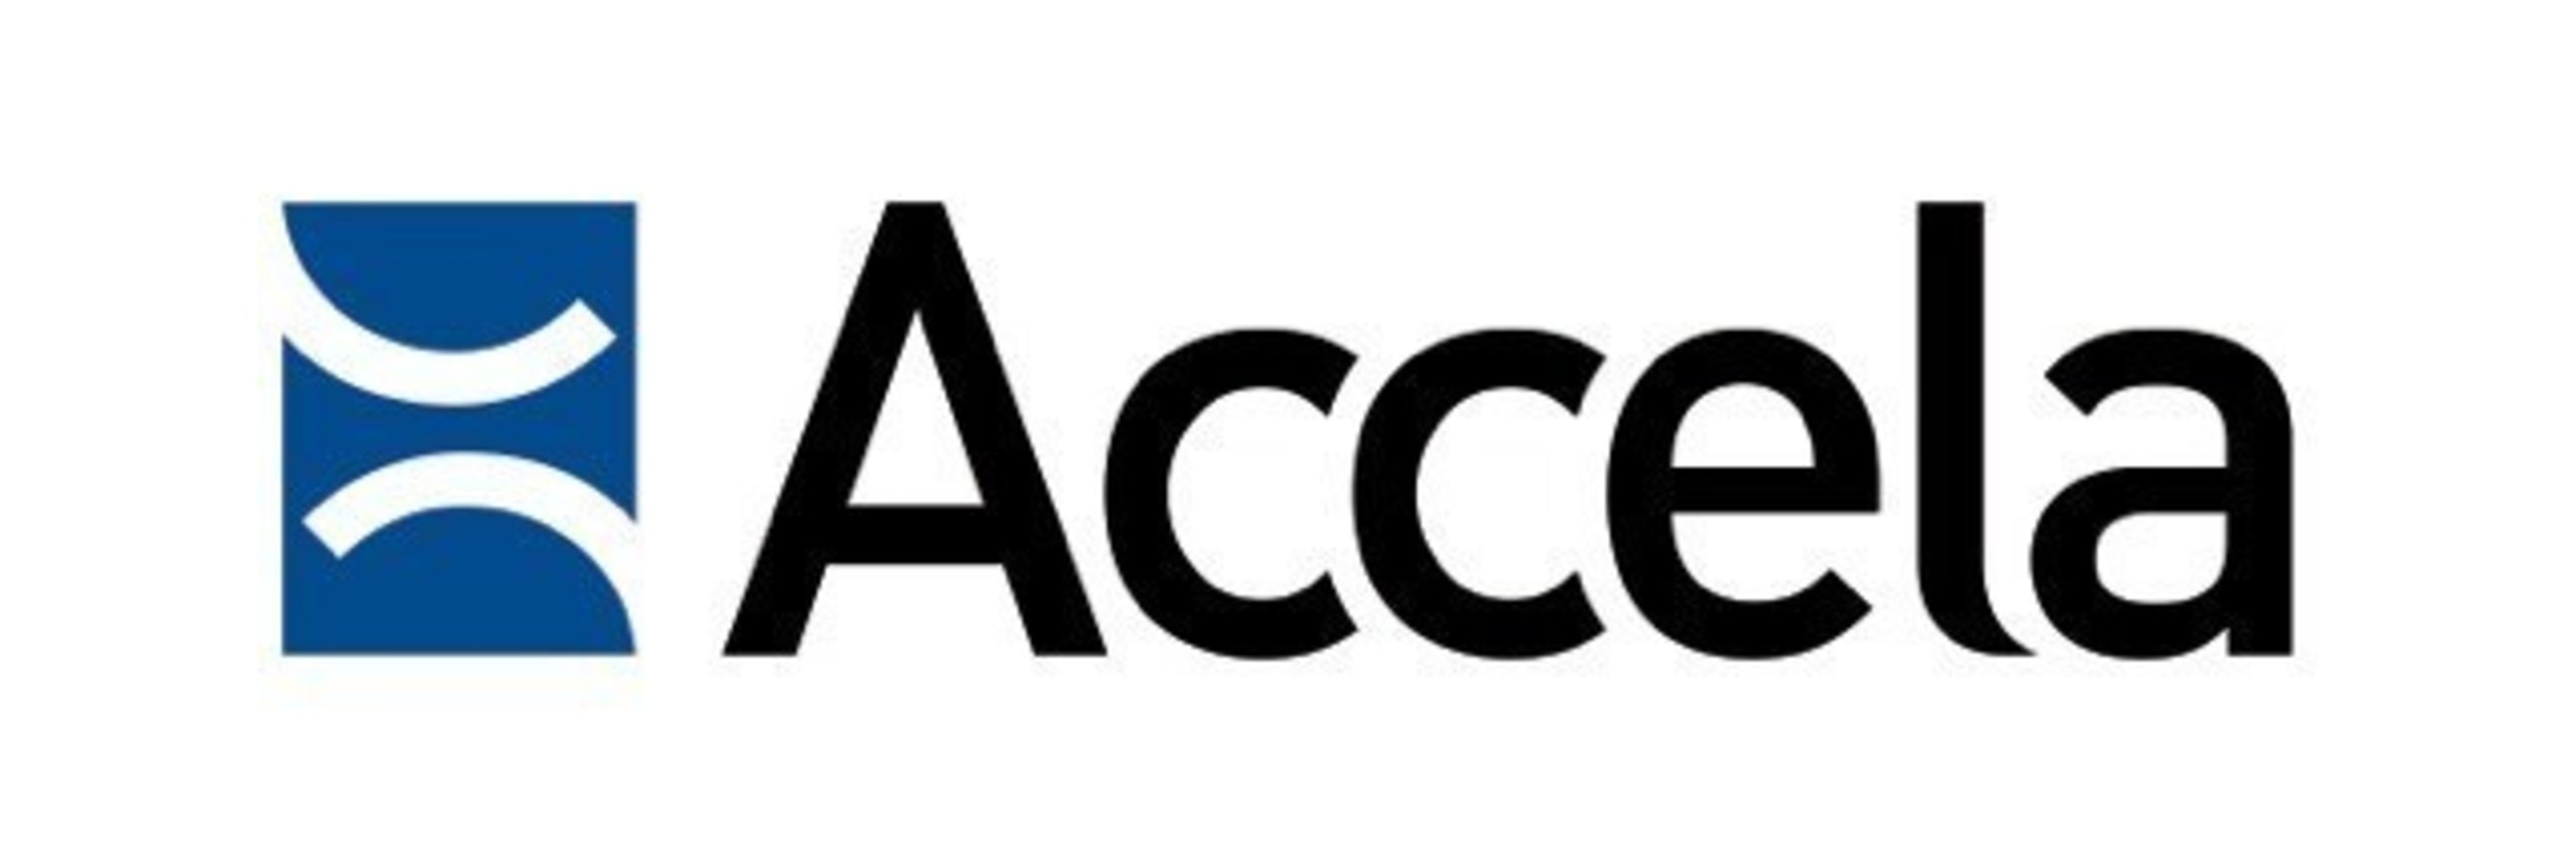 Accela Logo